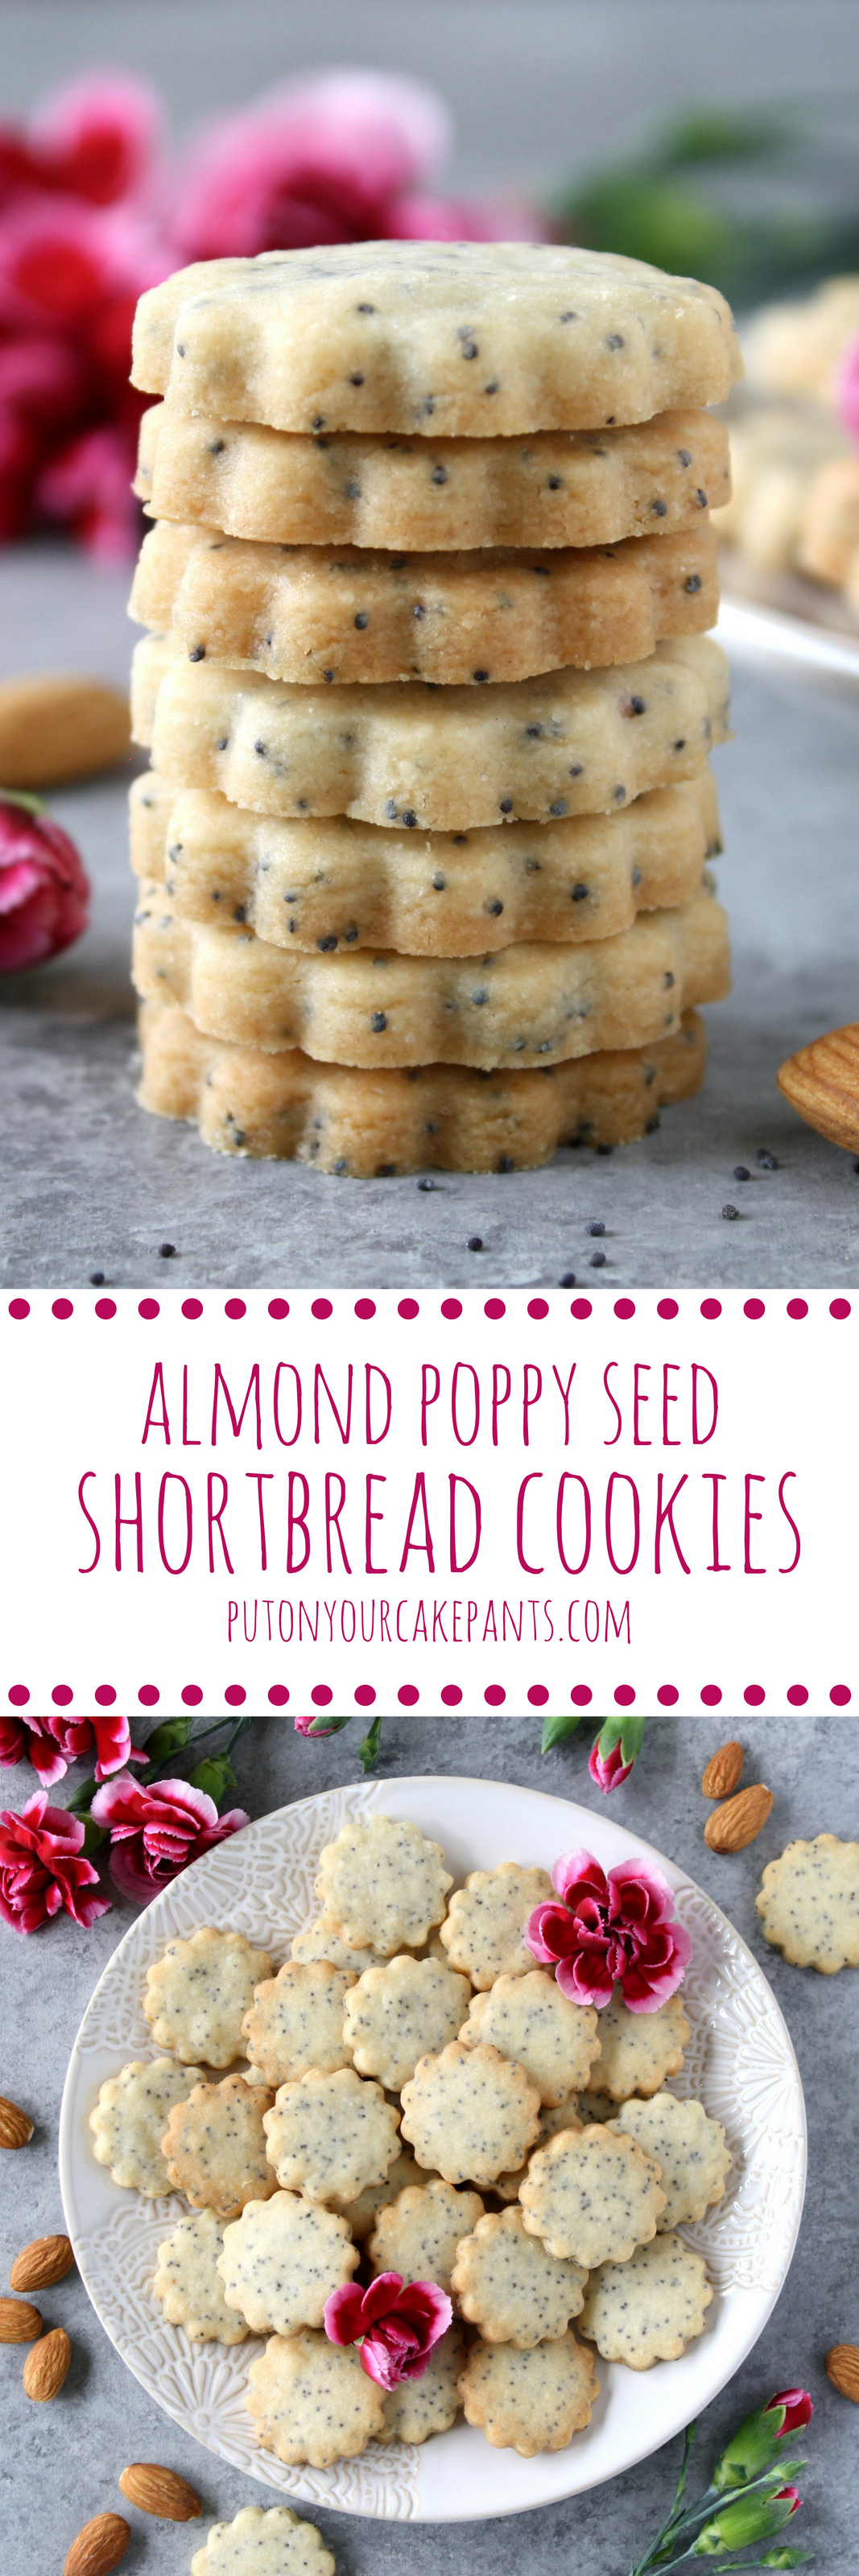 almond poppy seed shortbread cookies